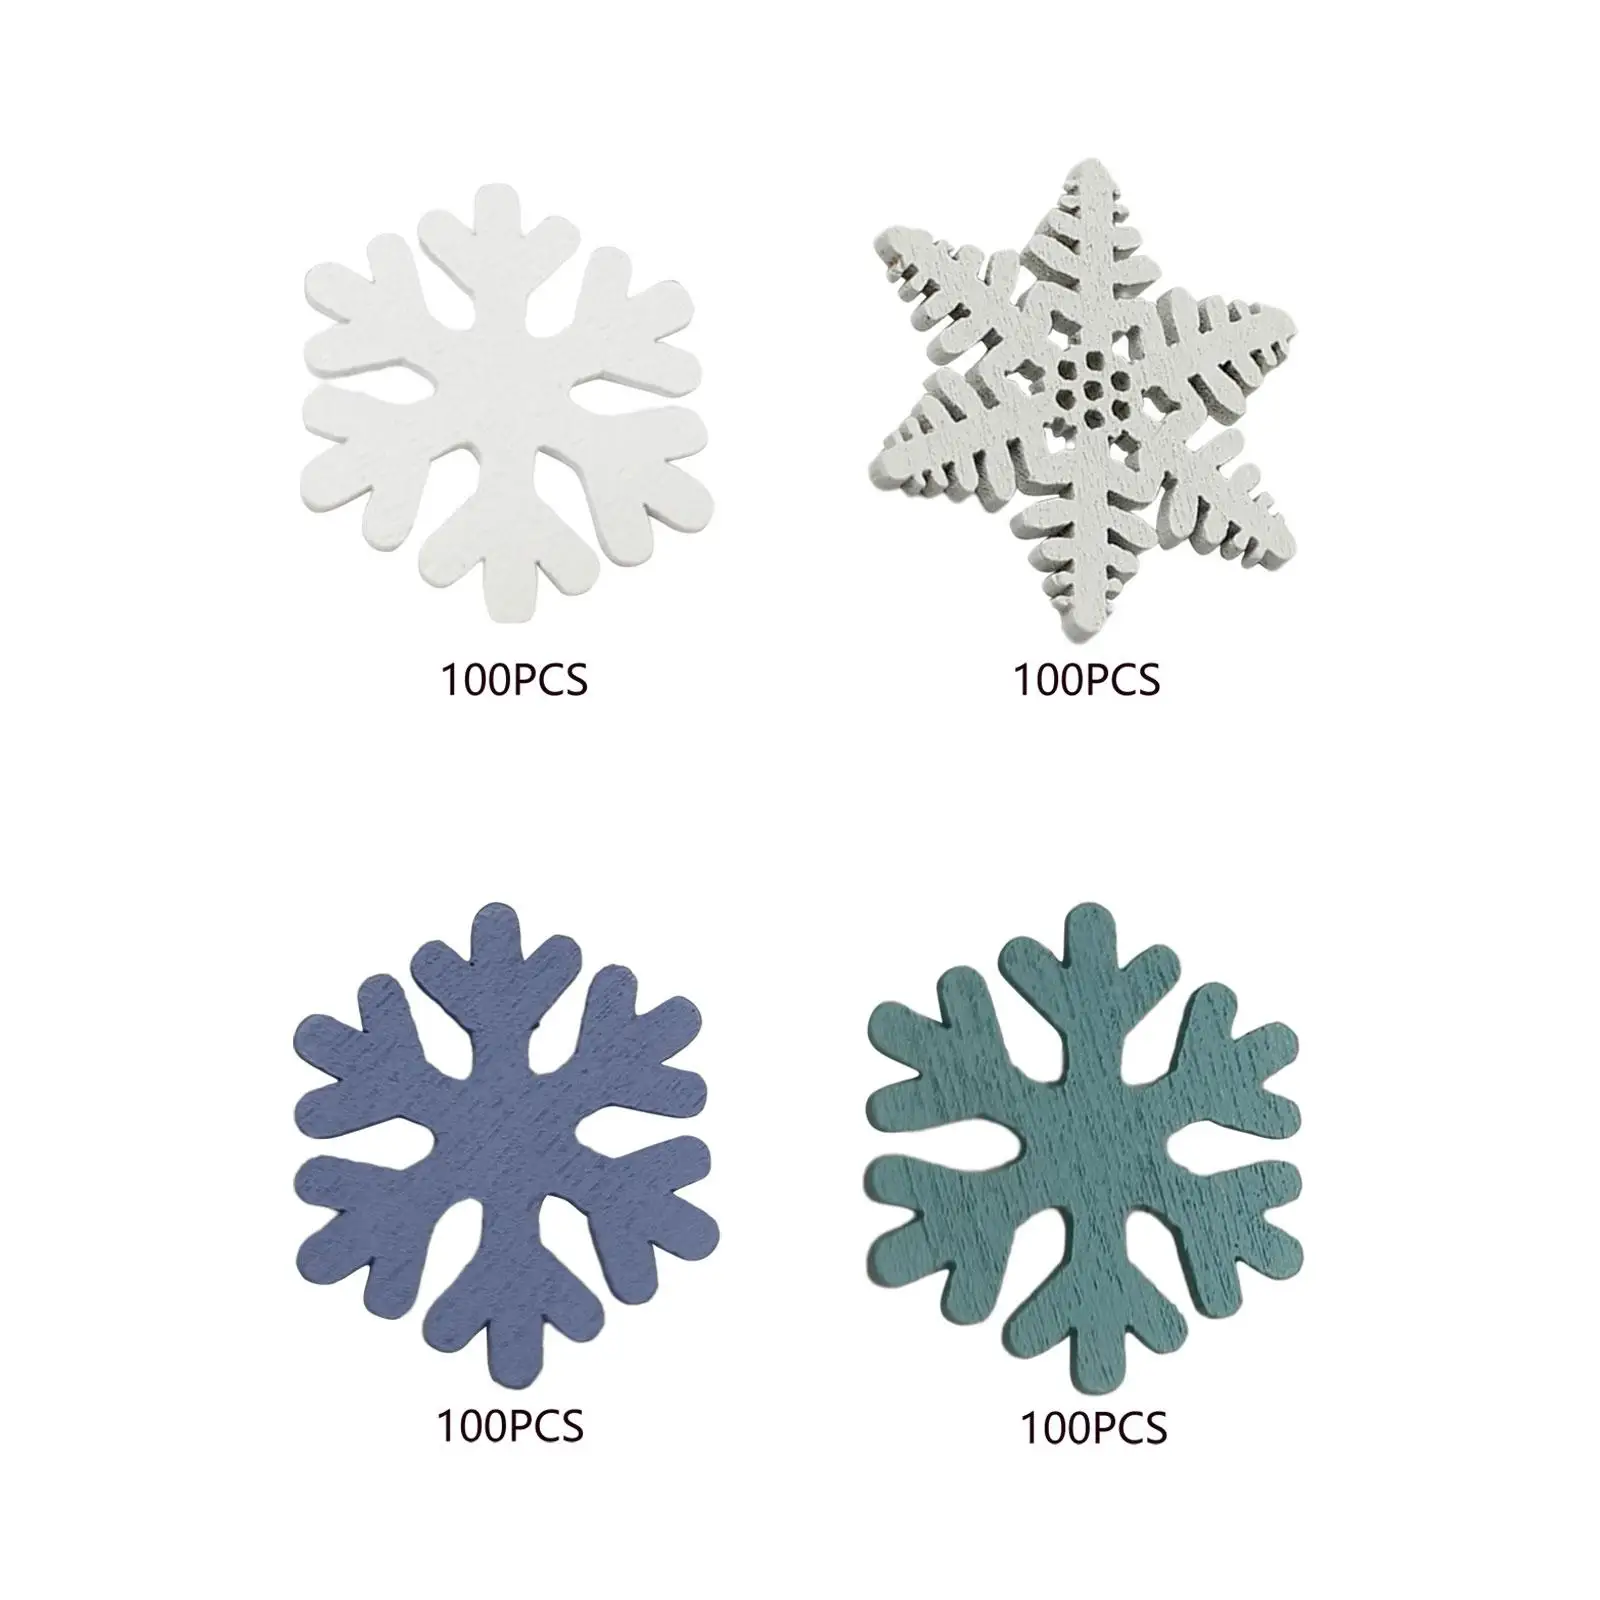 100Pcs Christmas Snowflake 3cm Decorative Wood Snowflake Embellishments Wood Slices for Clothing Fabric Wedding Birthday Holiday